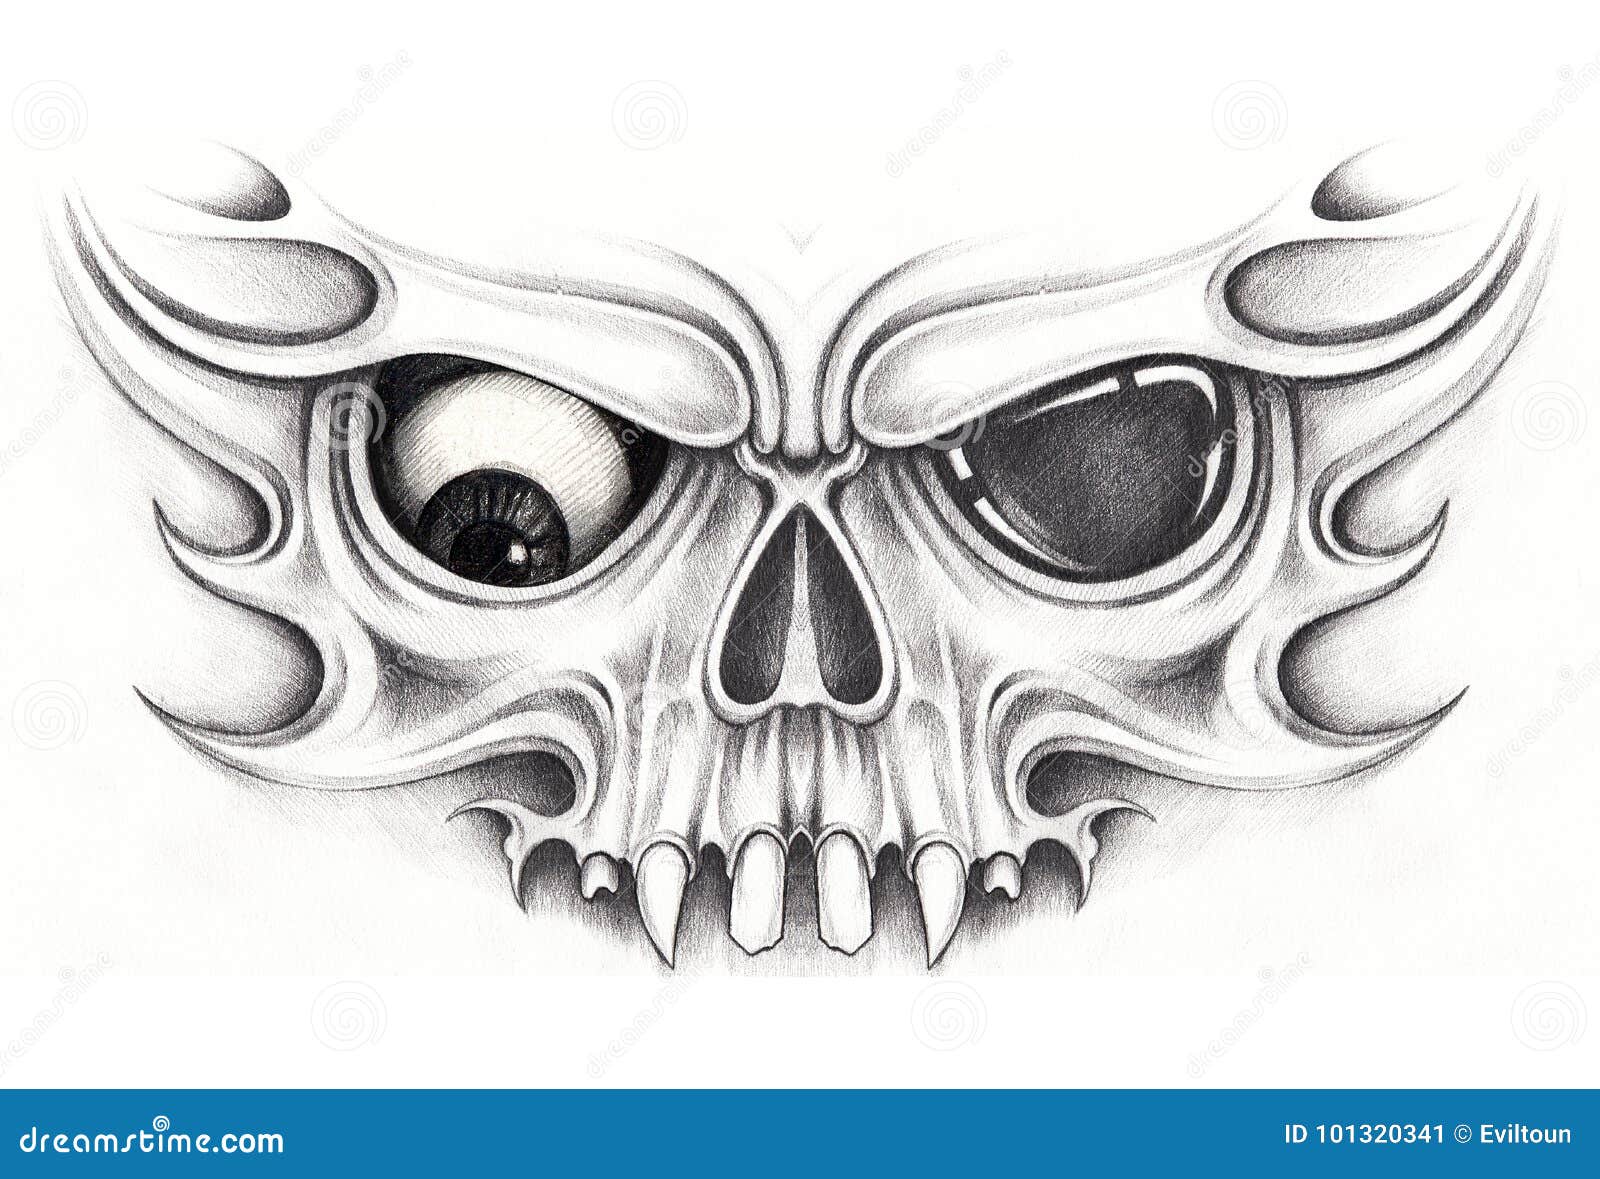 3 realistic skull tattoo design high resolution download – TattooDesignStock